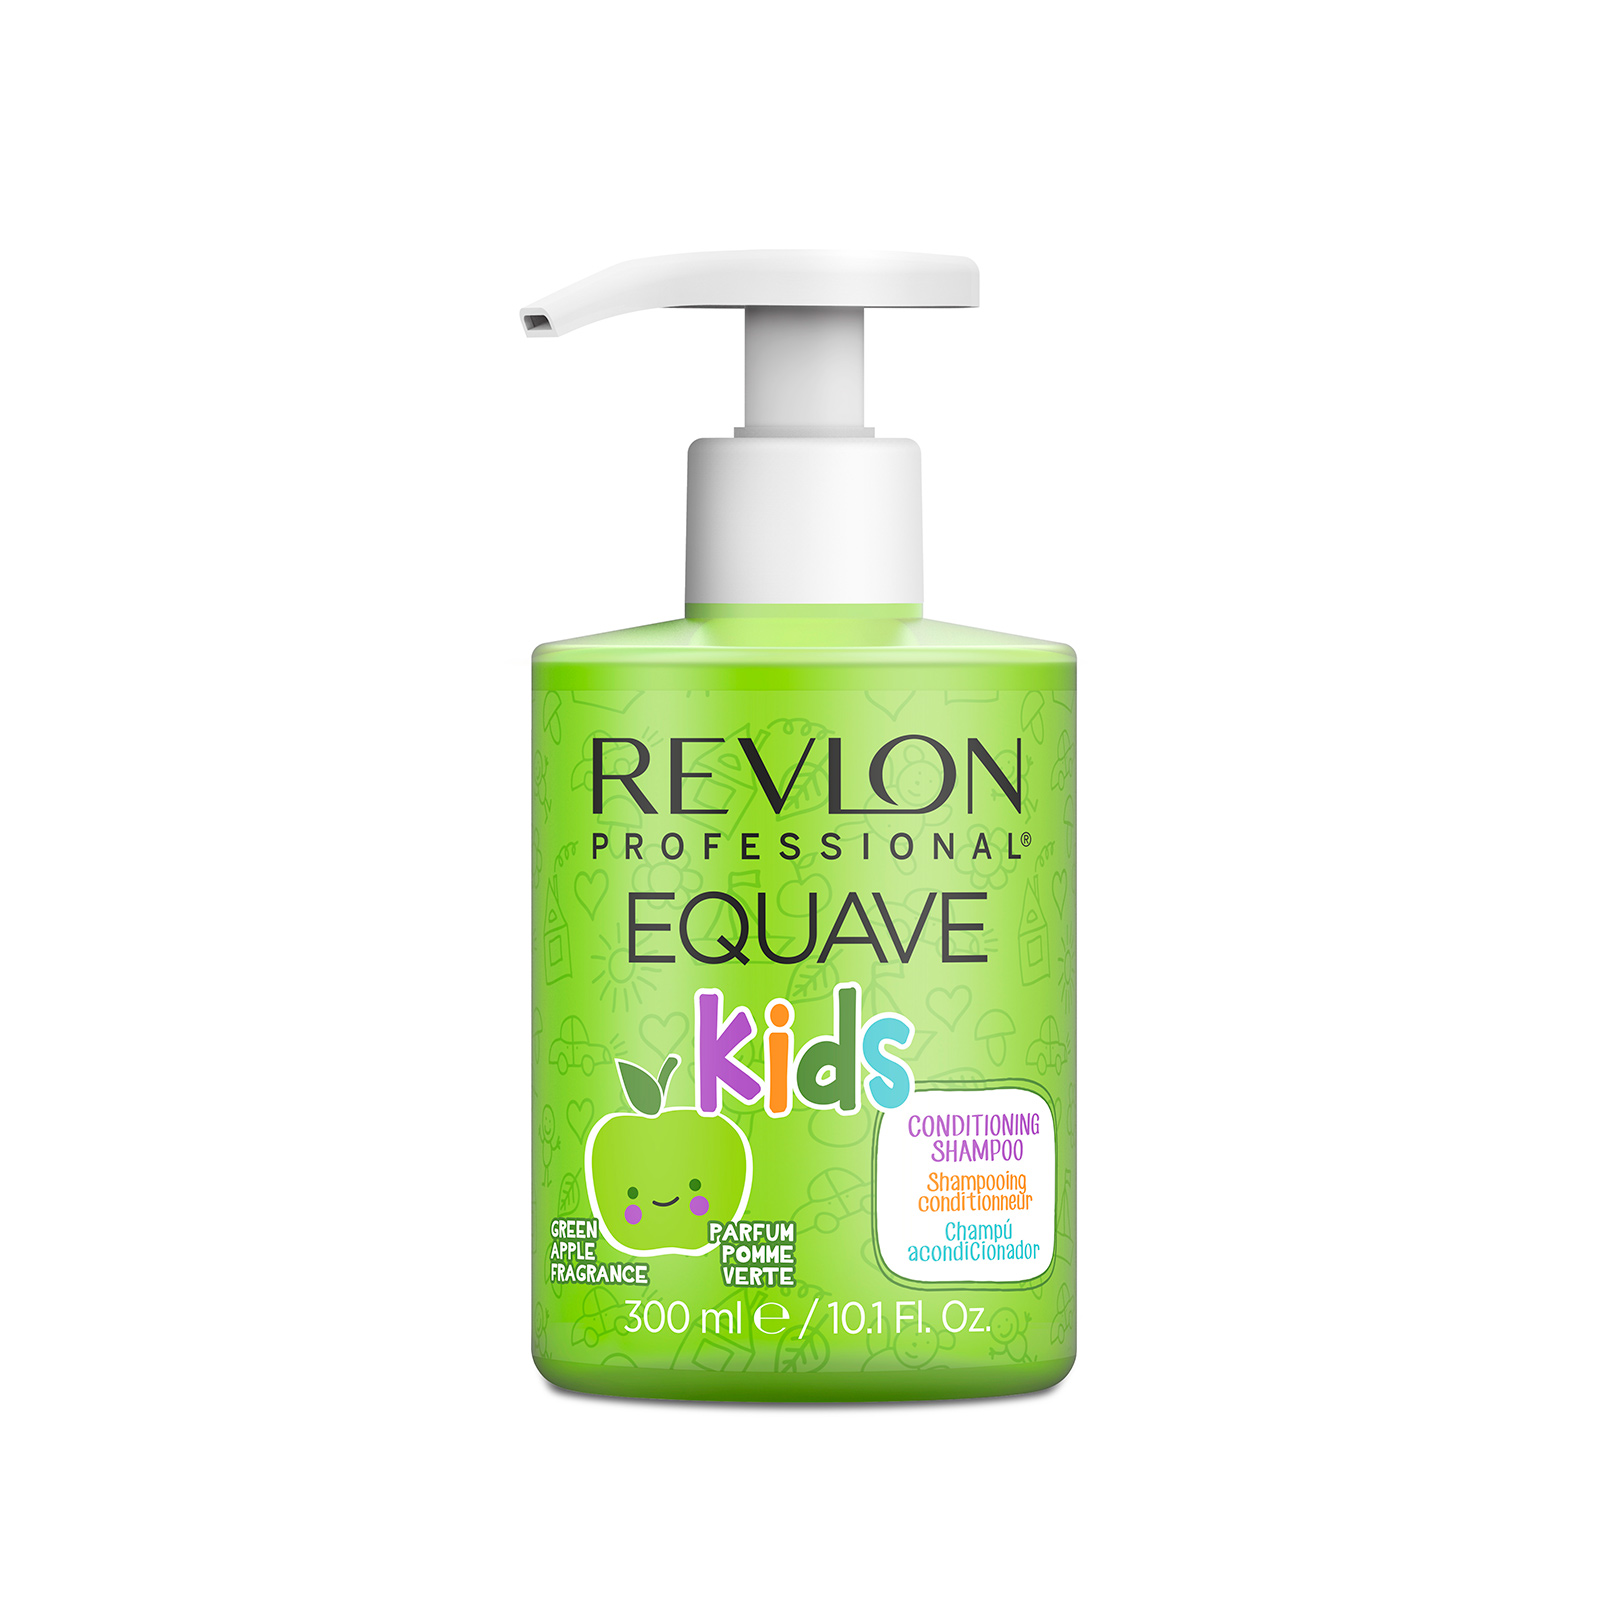 Revlon Professional Equave Kids™ Conditioning Shampoo - Revlon Professional